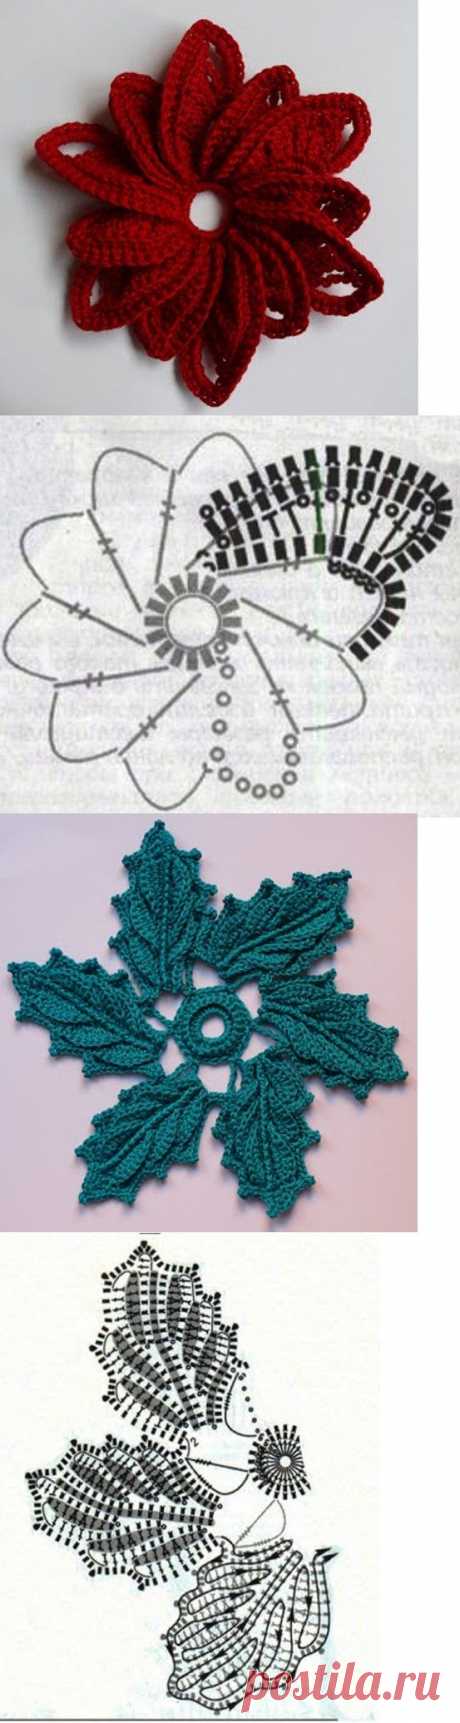 (15) motifs crochet | Crochet